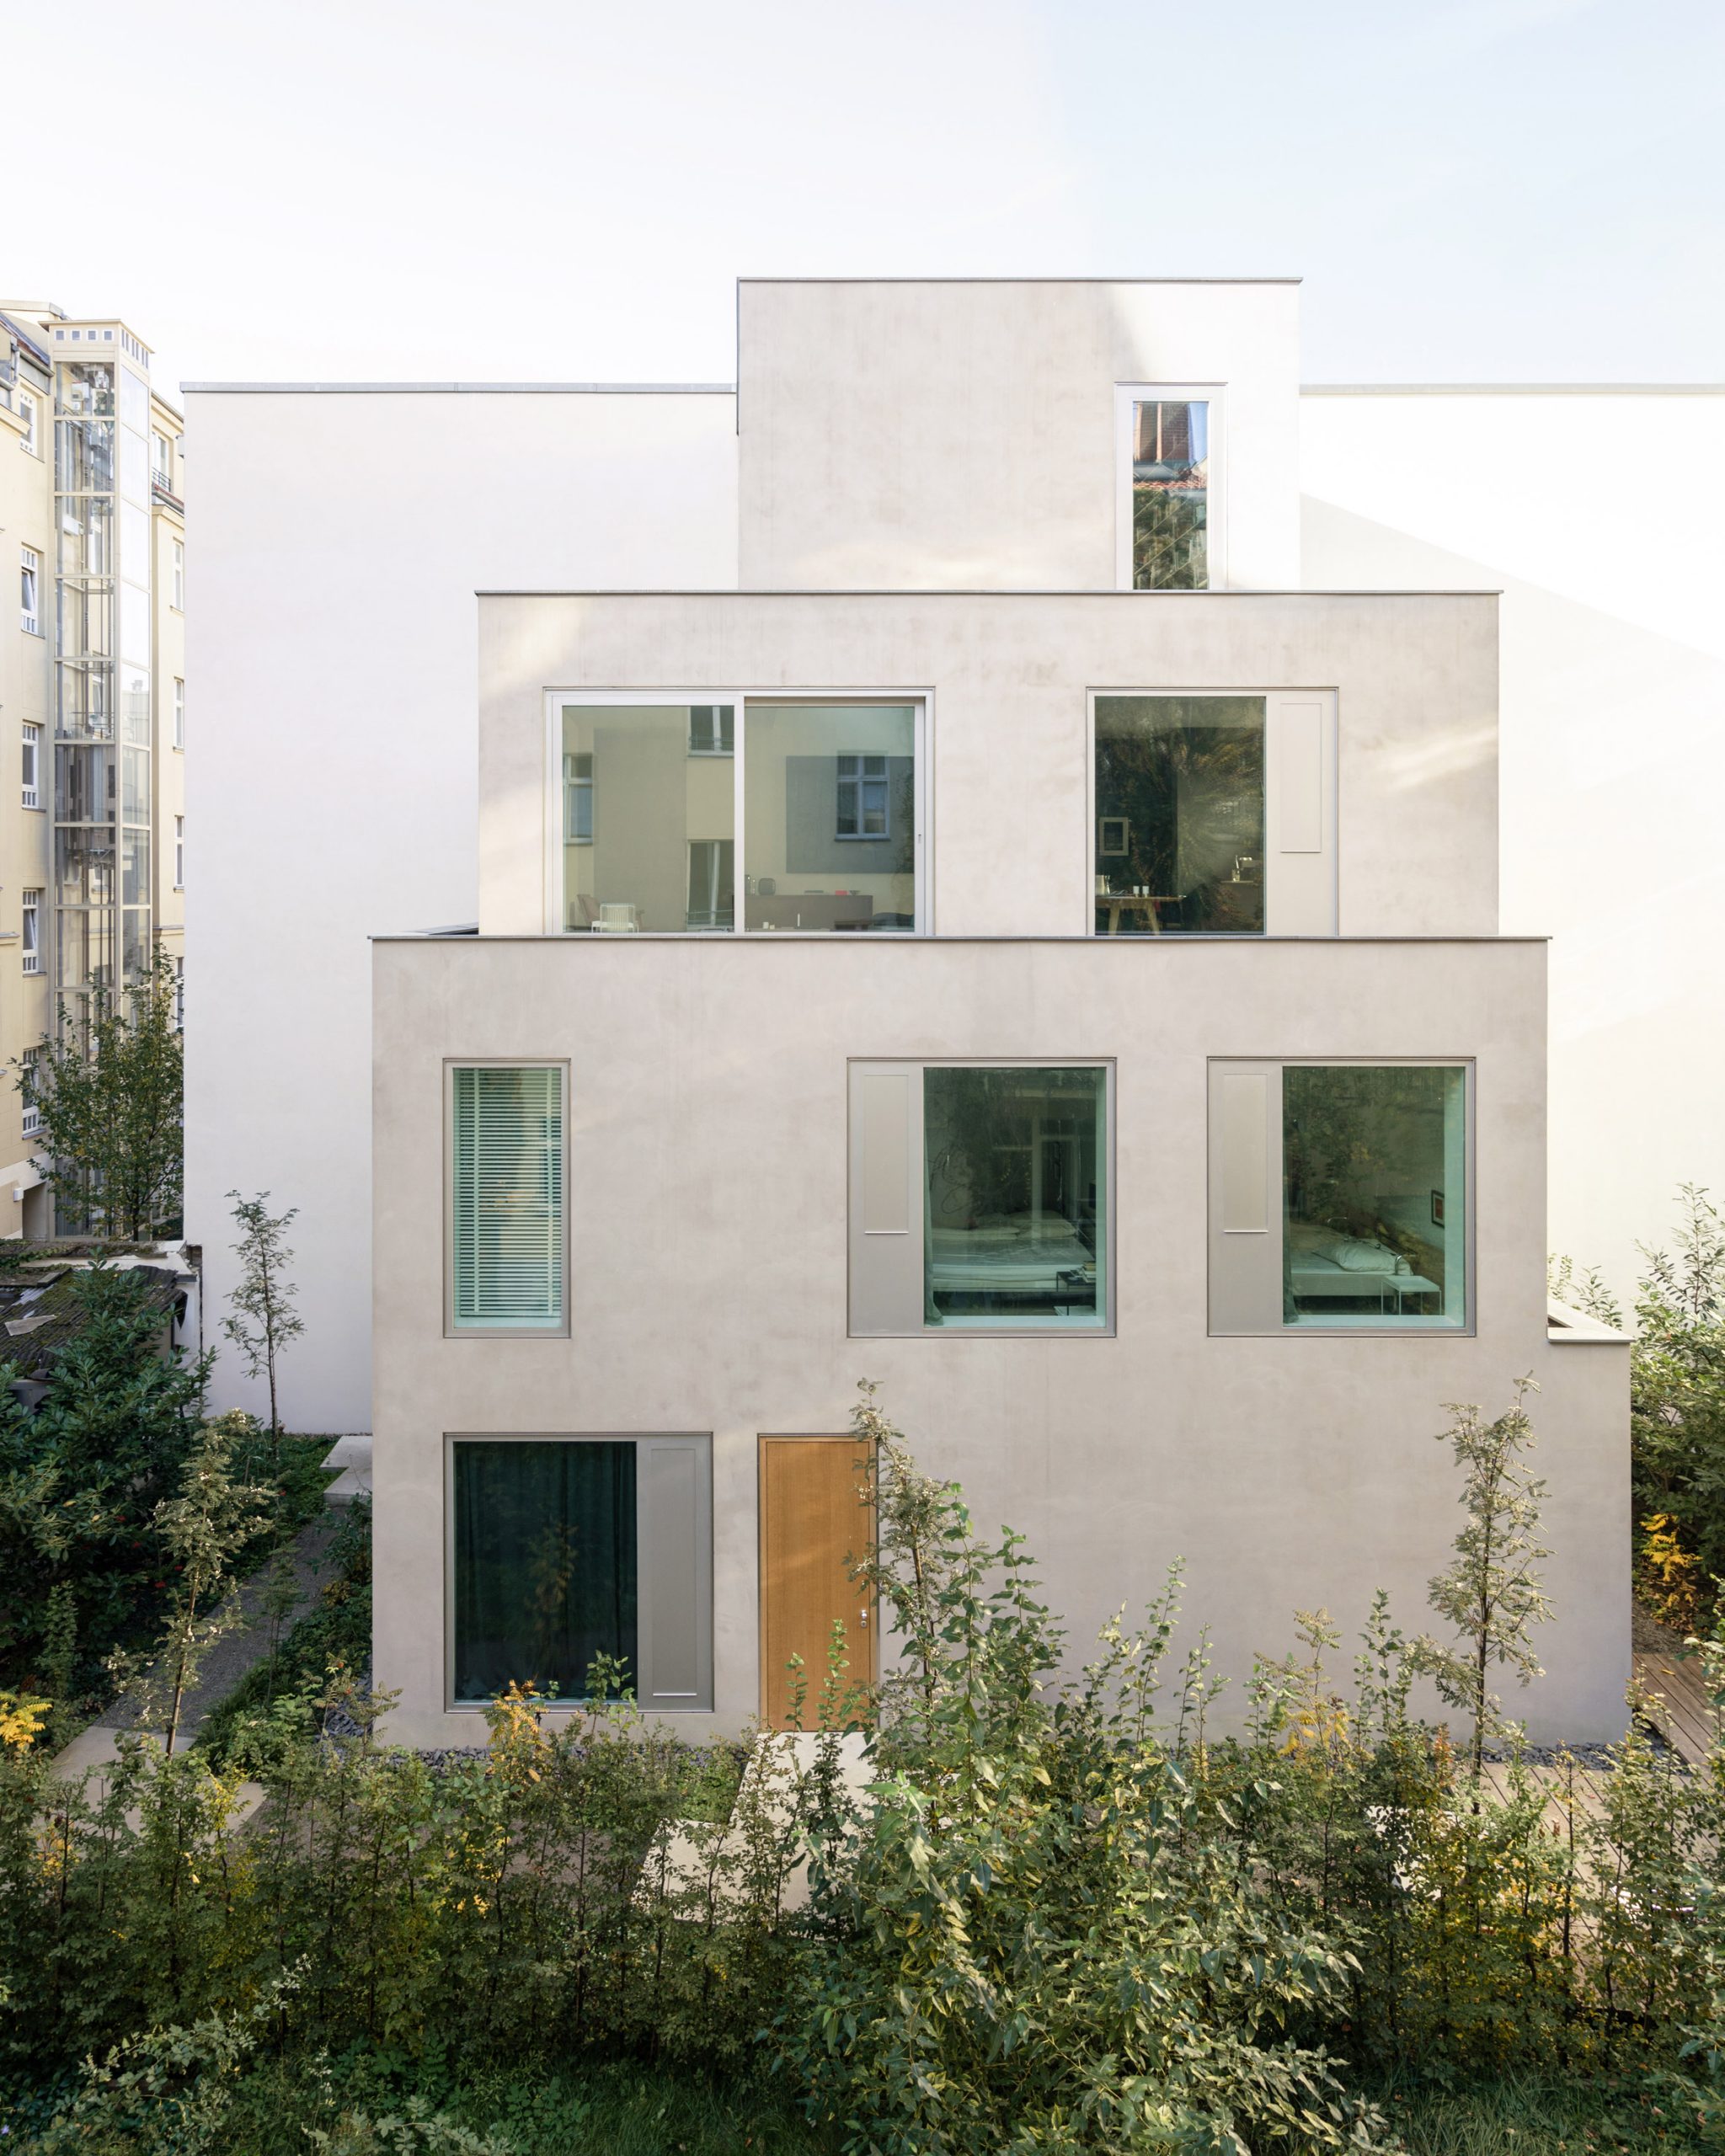 The grey stacked home is located in a Berlin courtyard by Batek Architekten